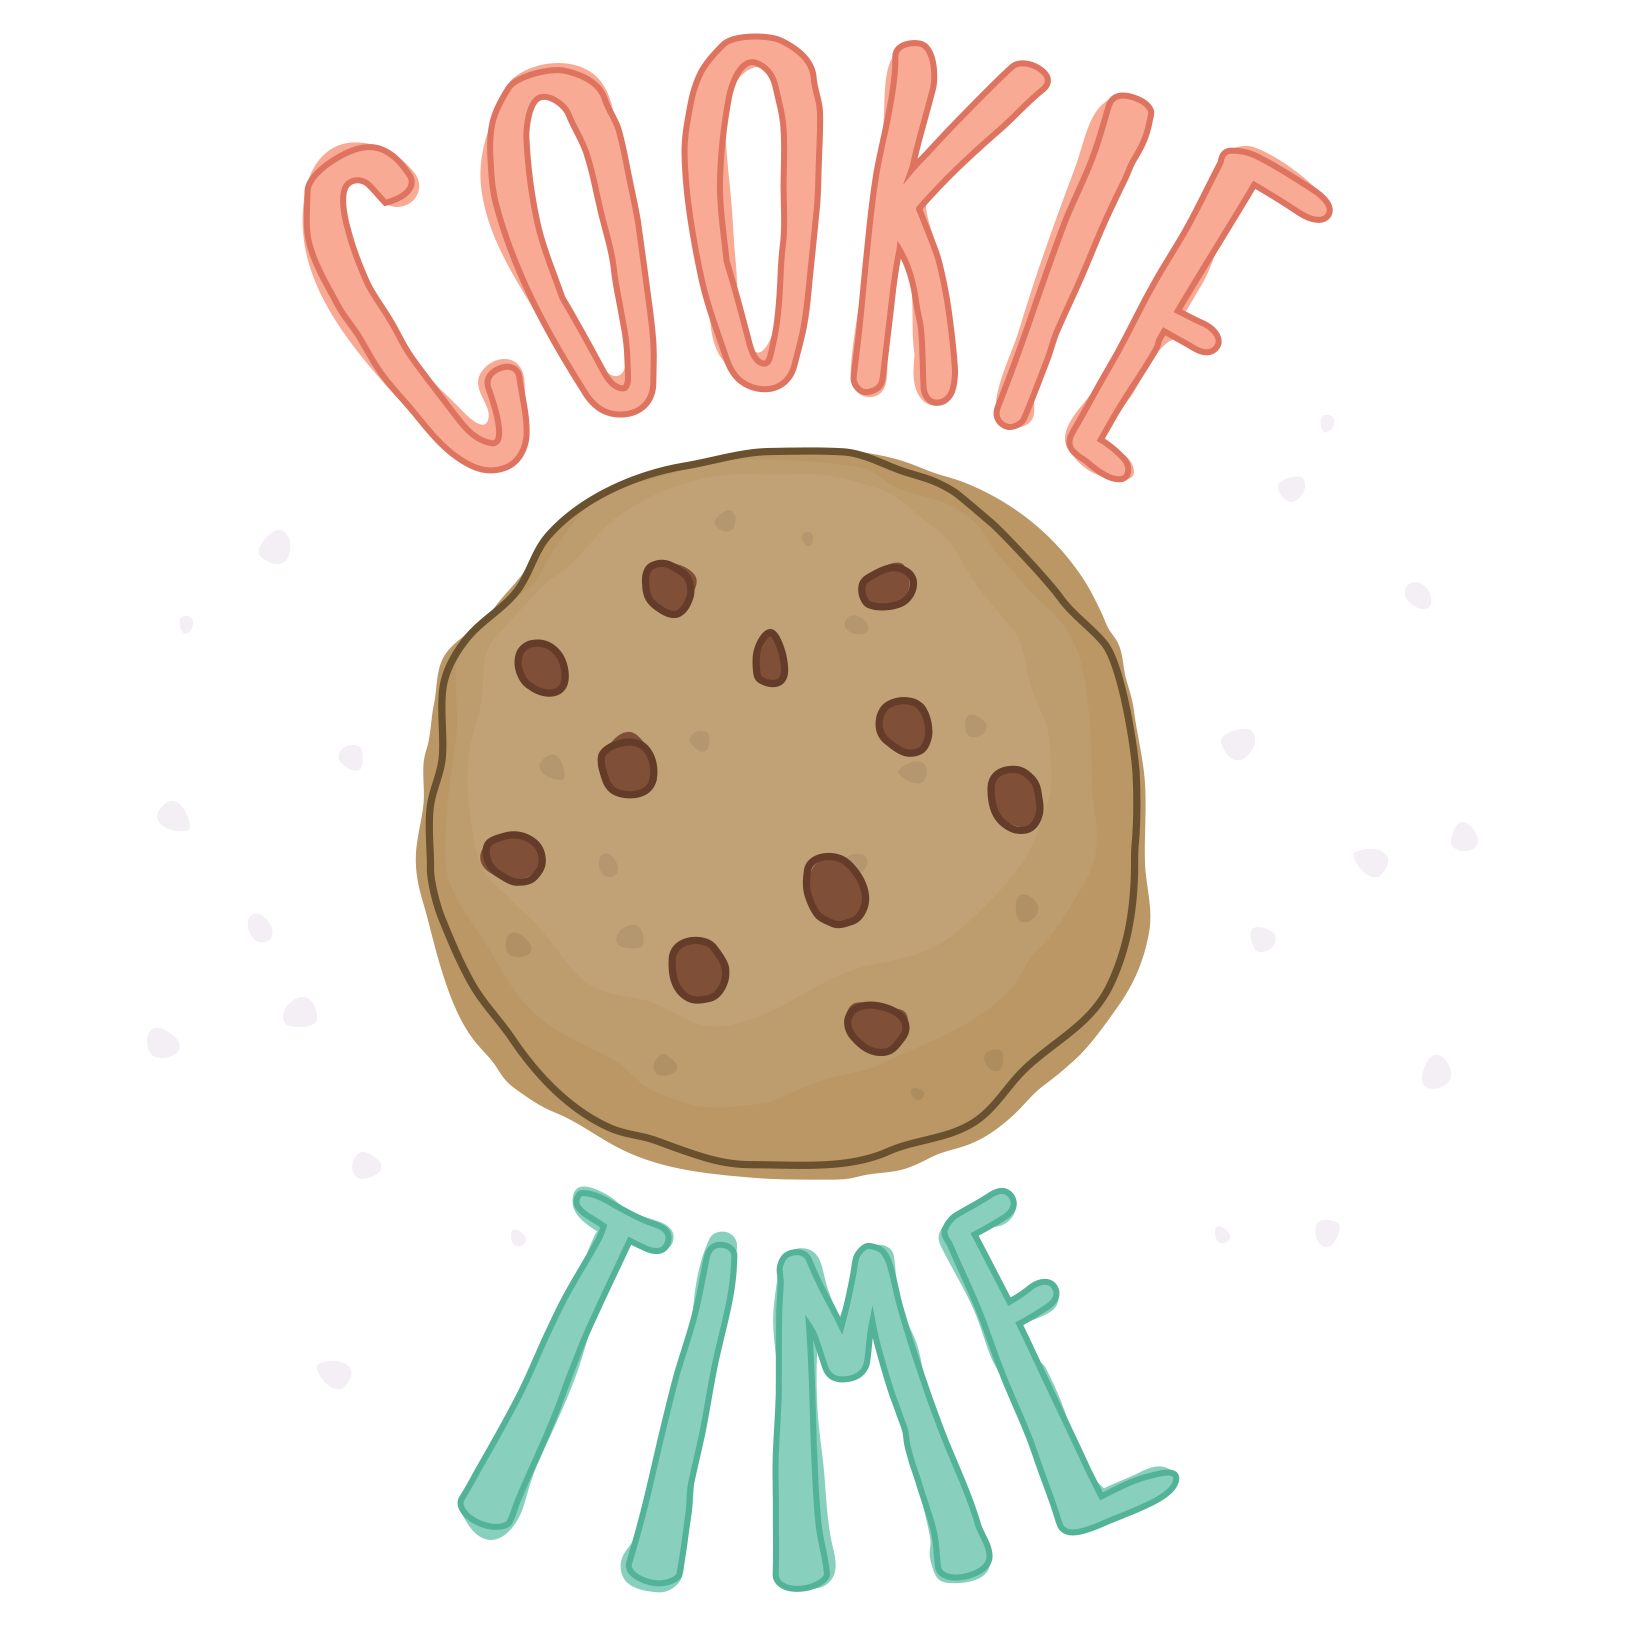 CookieTimePodcast